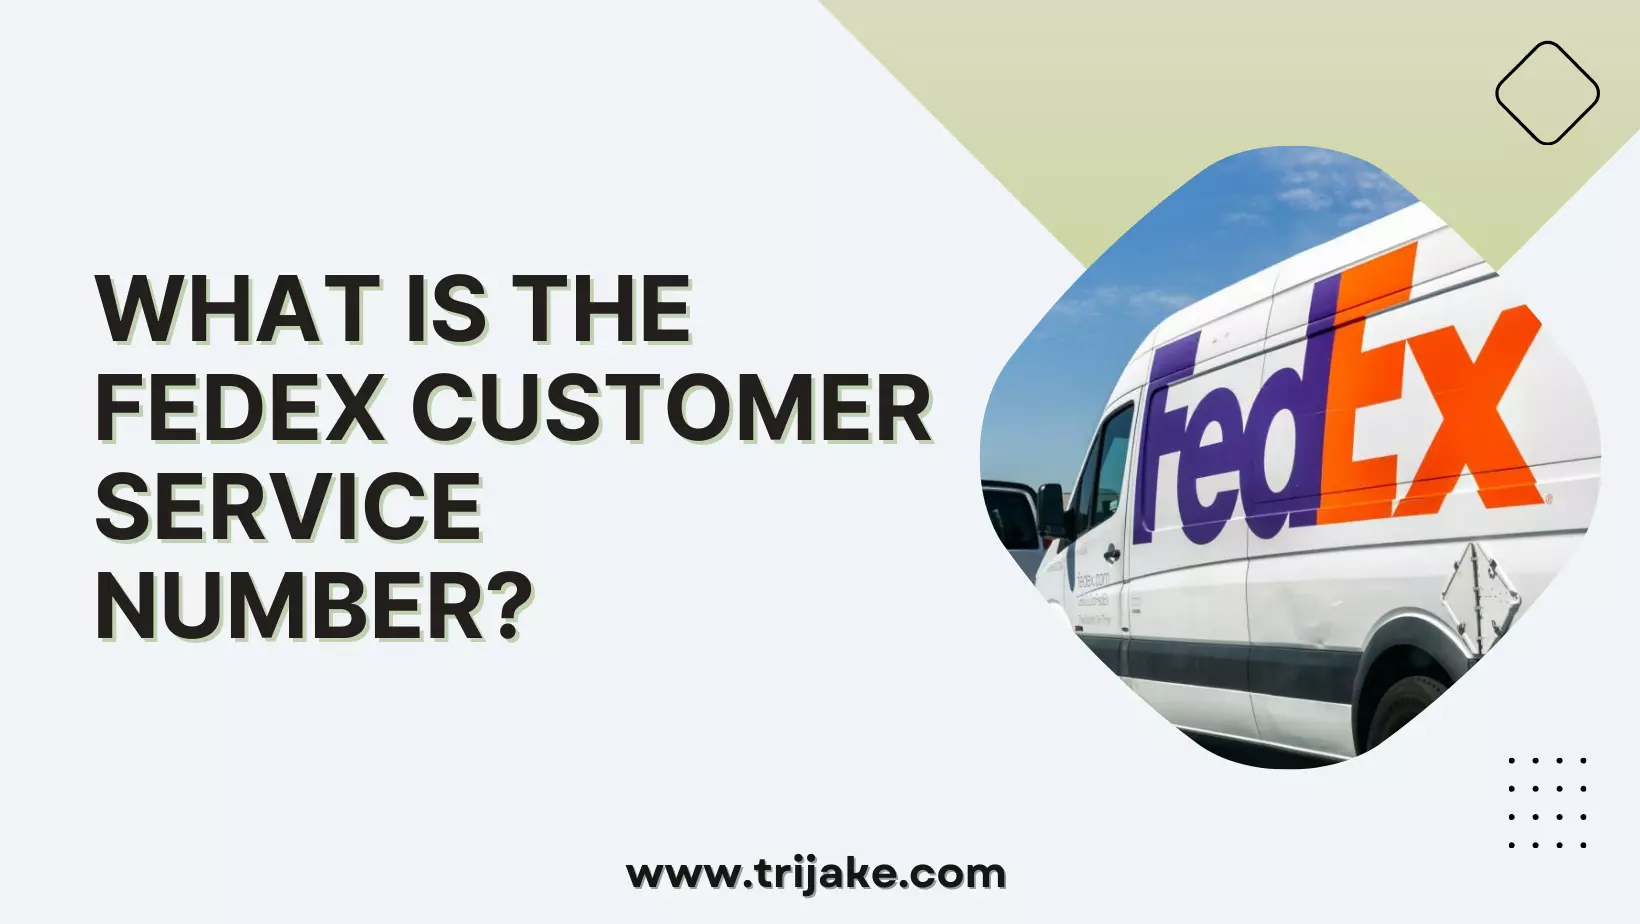 fedex customer service number